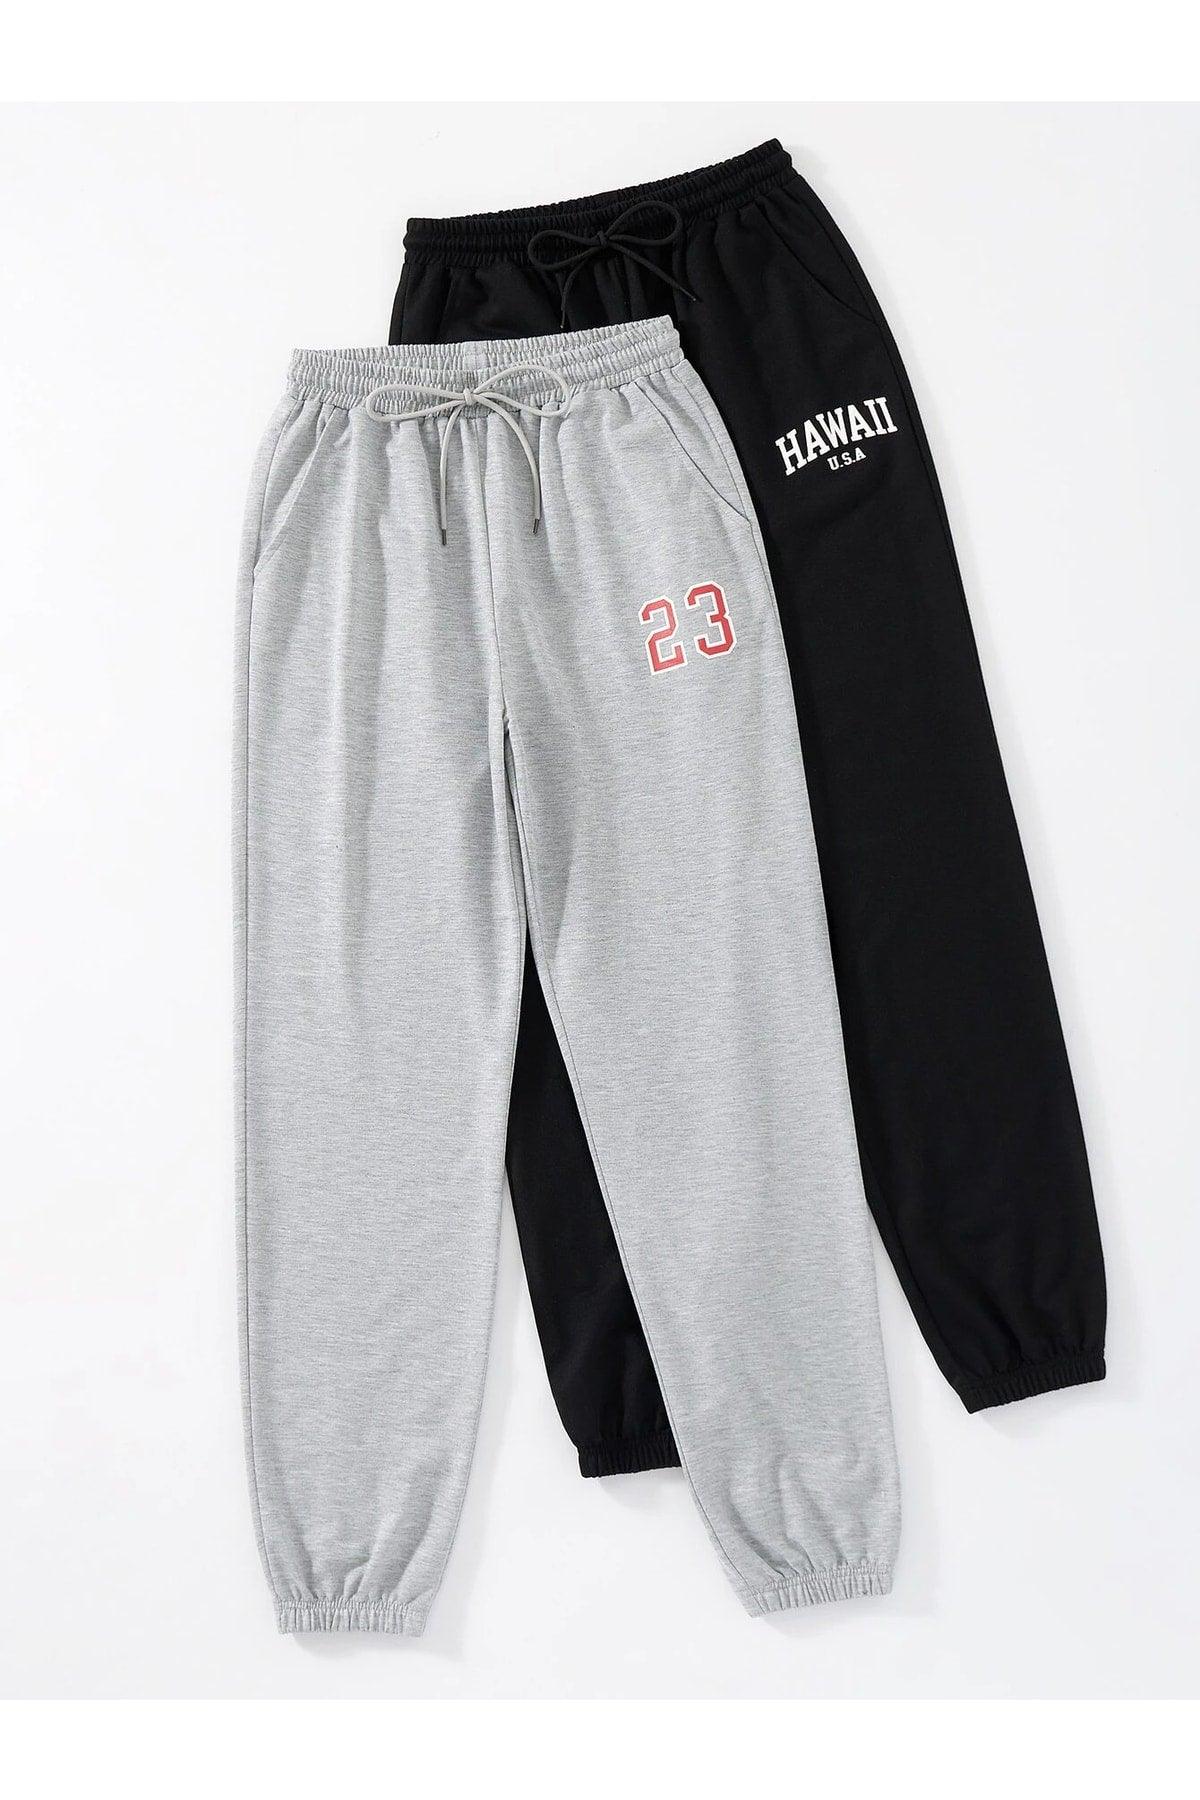 2-Pack Printed Jogger Sweatpants - Black And Grey, Elastic Leg, High Waist, Summer - Swordslife